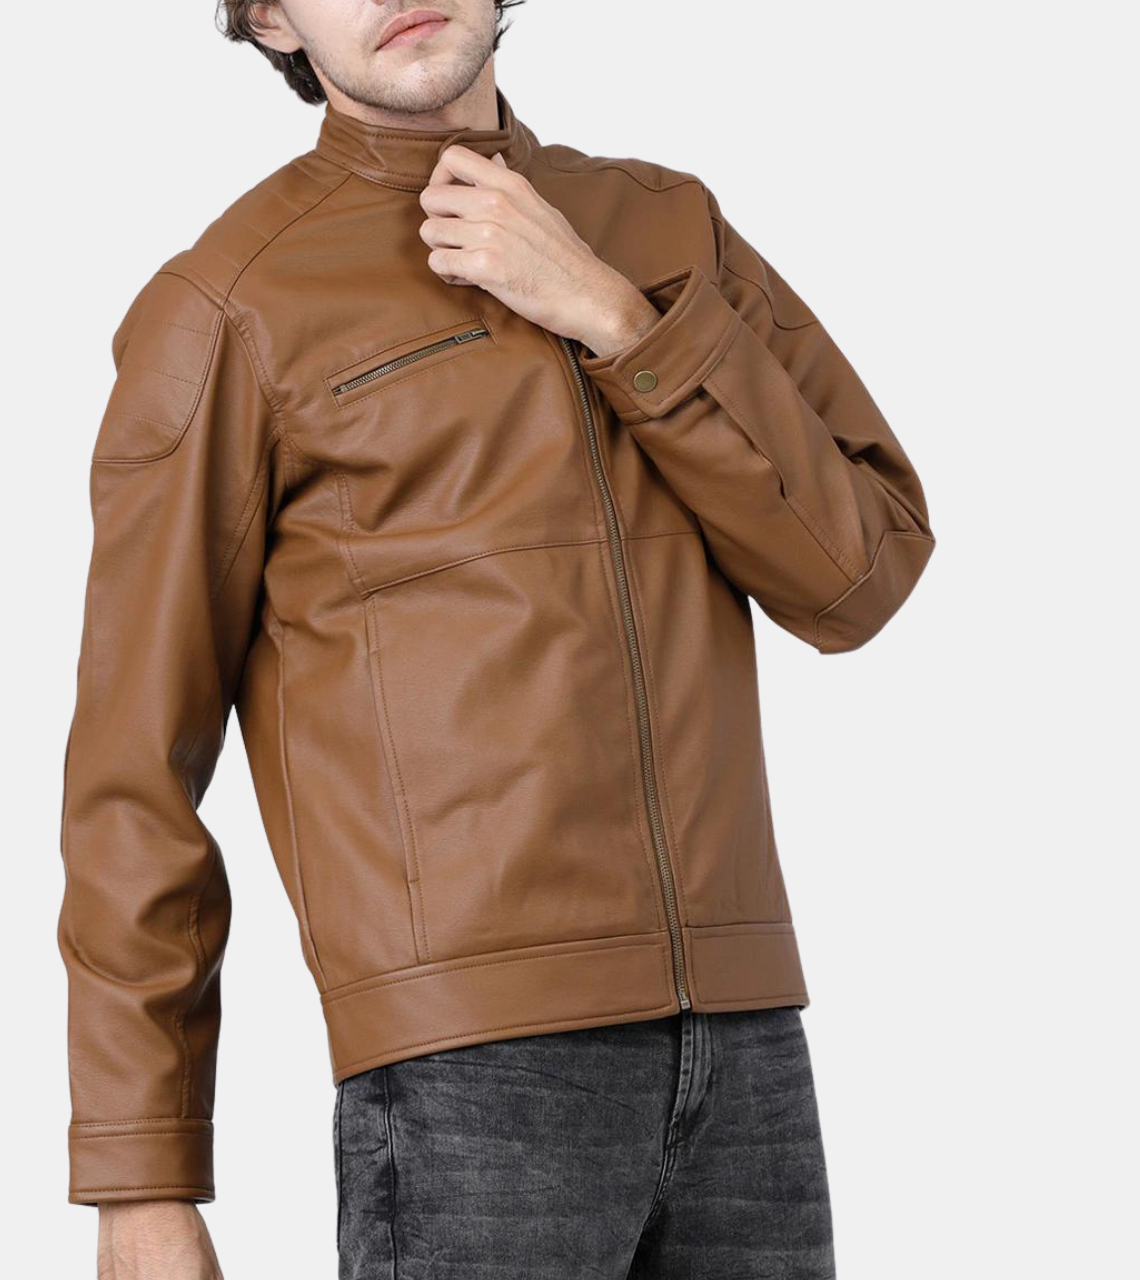  Jullian Tan Brown Leather Jacket For Men's